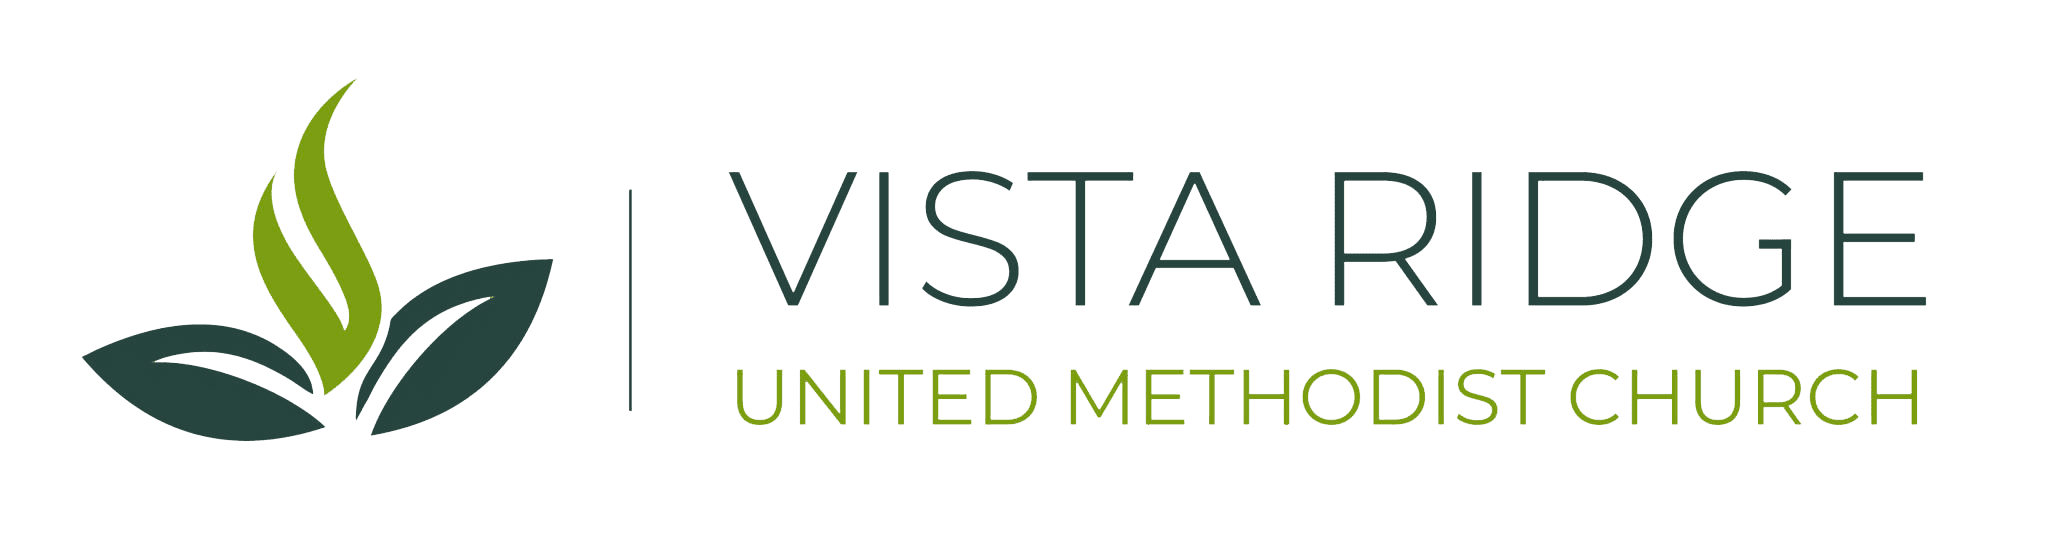 Vista Ridge UMC Logo